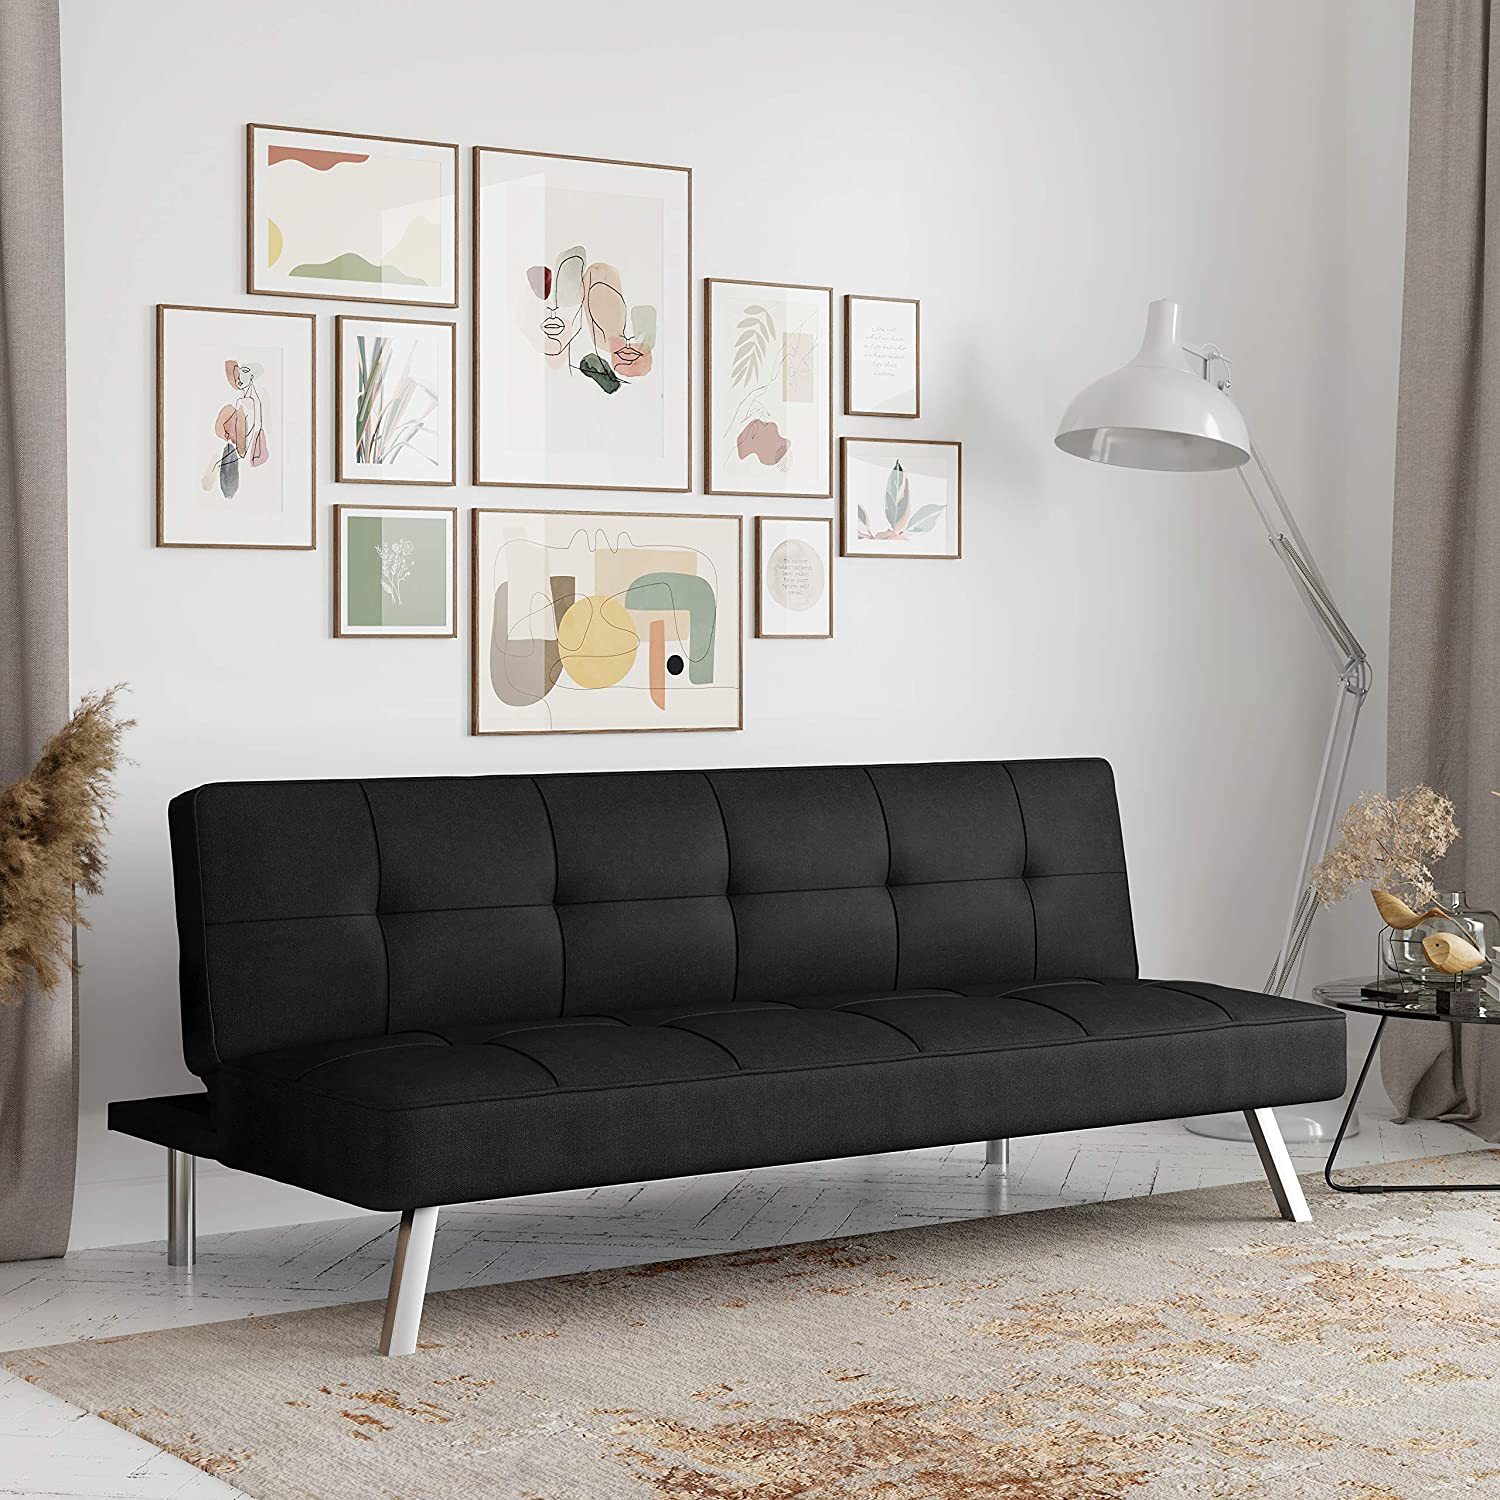 Serta Rane Convertible Sofa Bed, 66.1" W x 33.1" D x 29.5" H, Black - $233.99